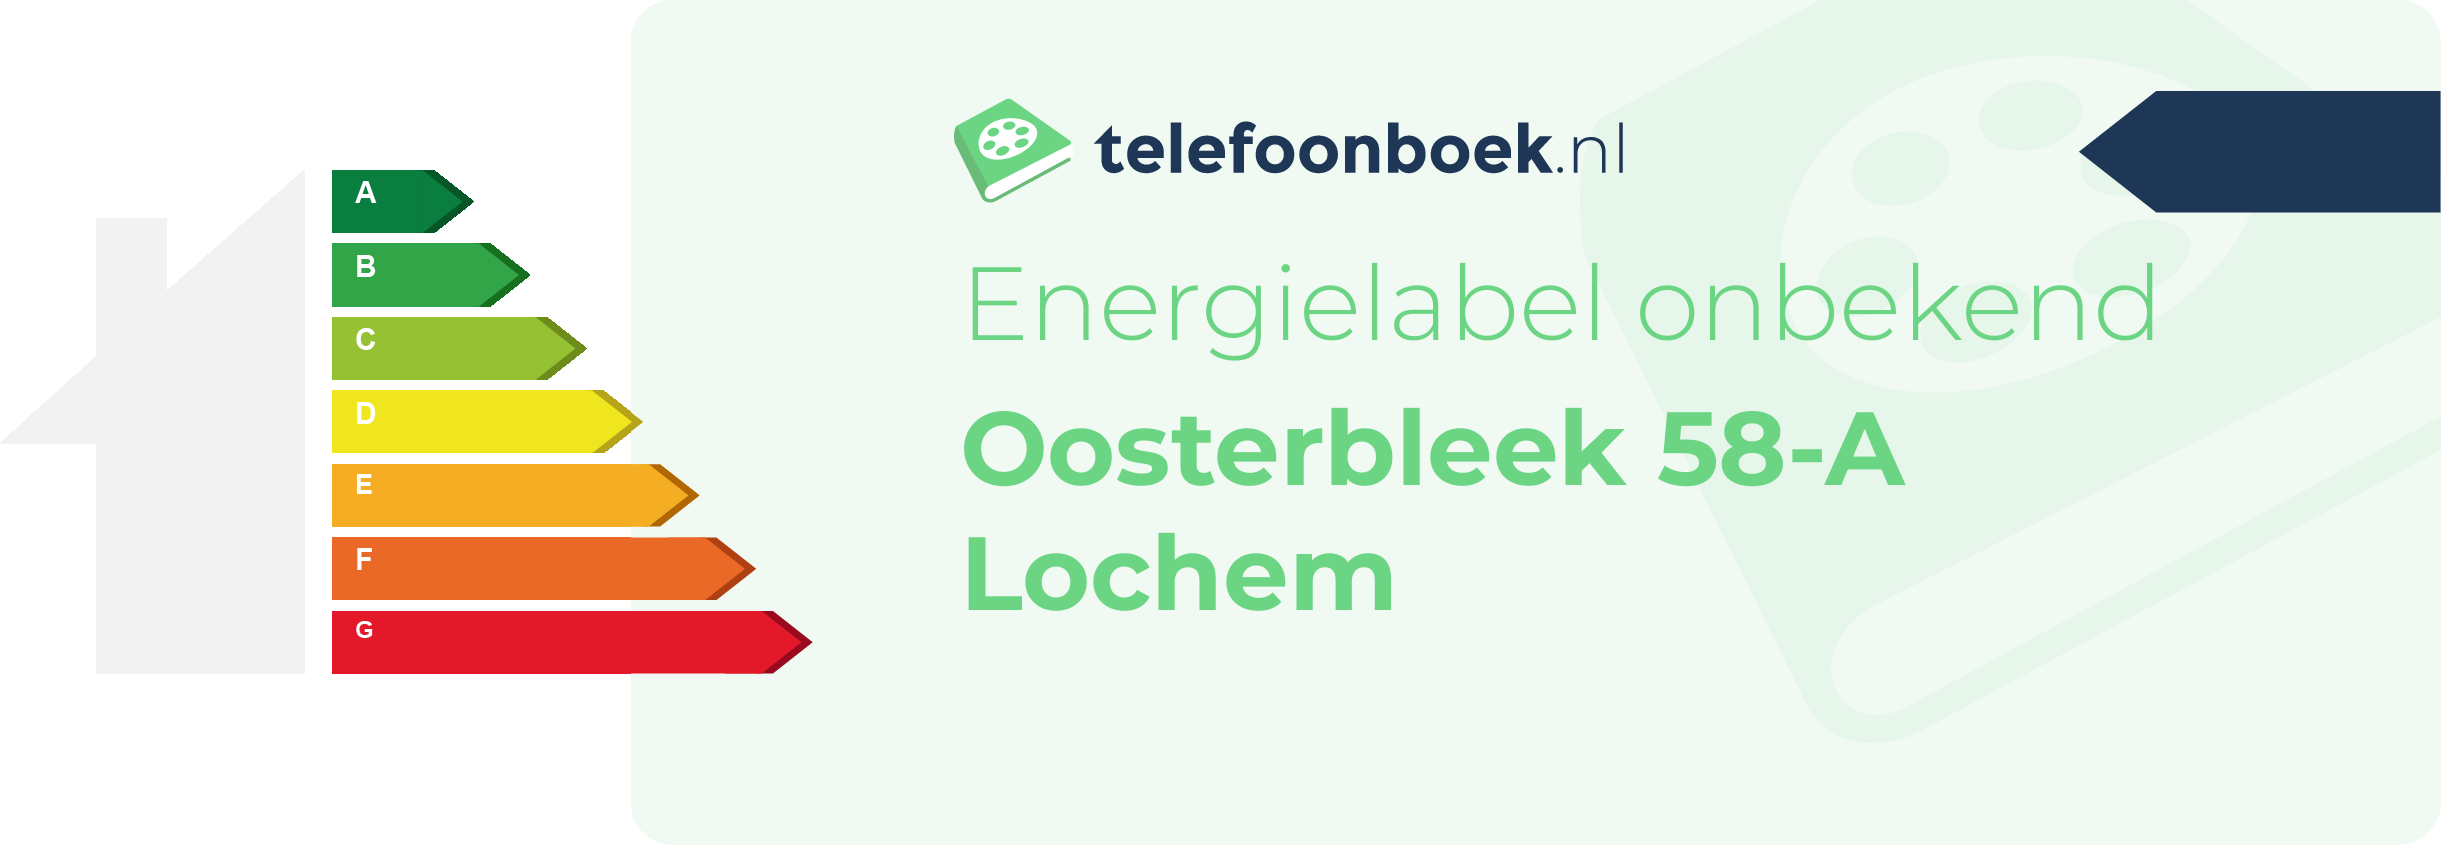 Energielabel Oosterbleek 58-A Lochem